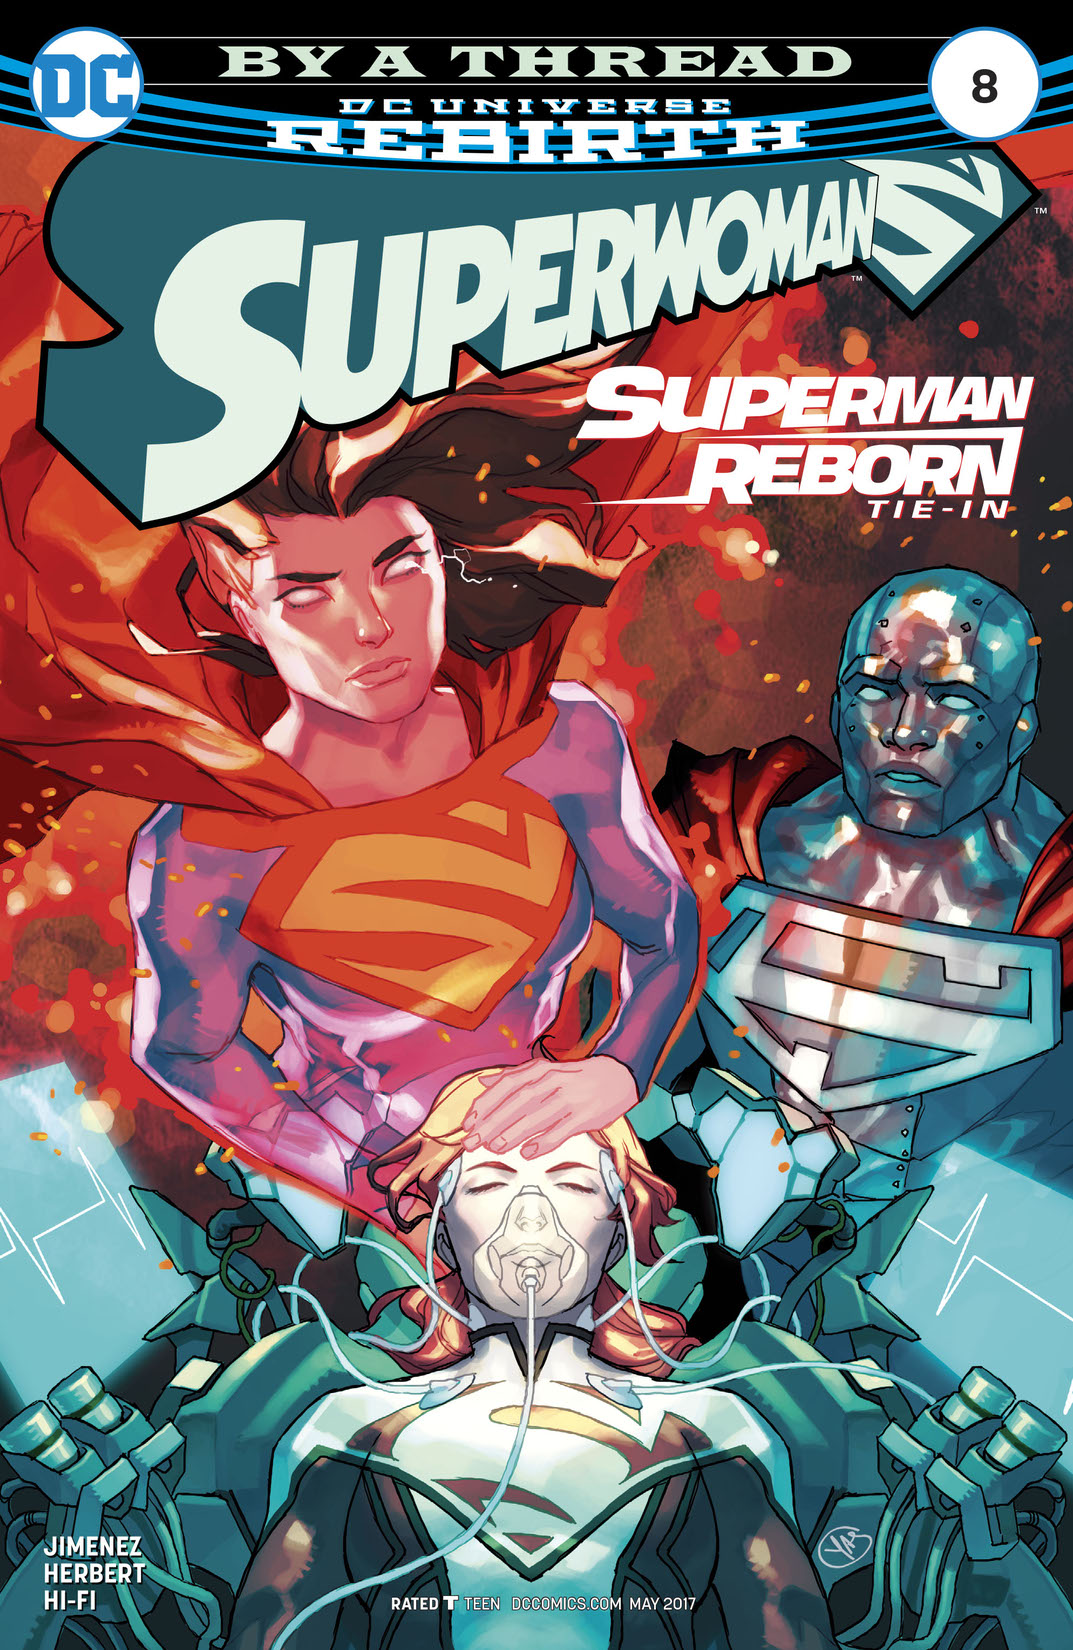 Superwoman #8 preview images